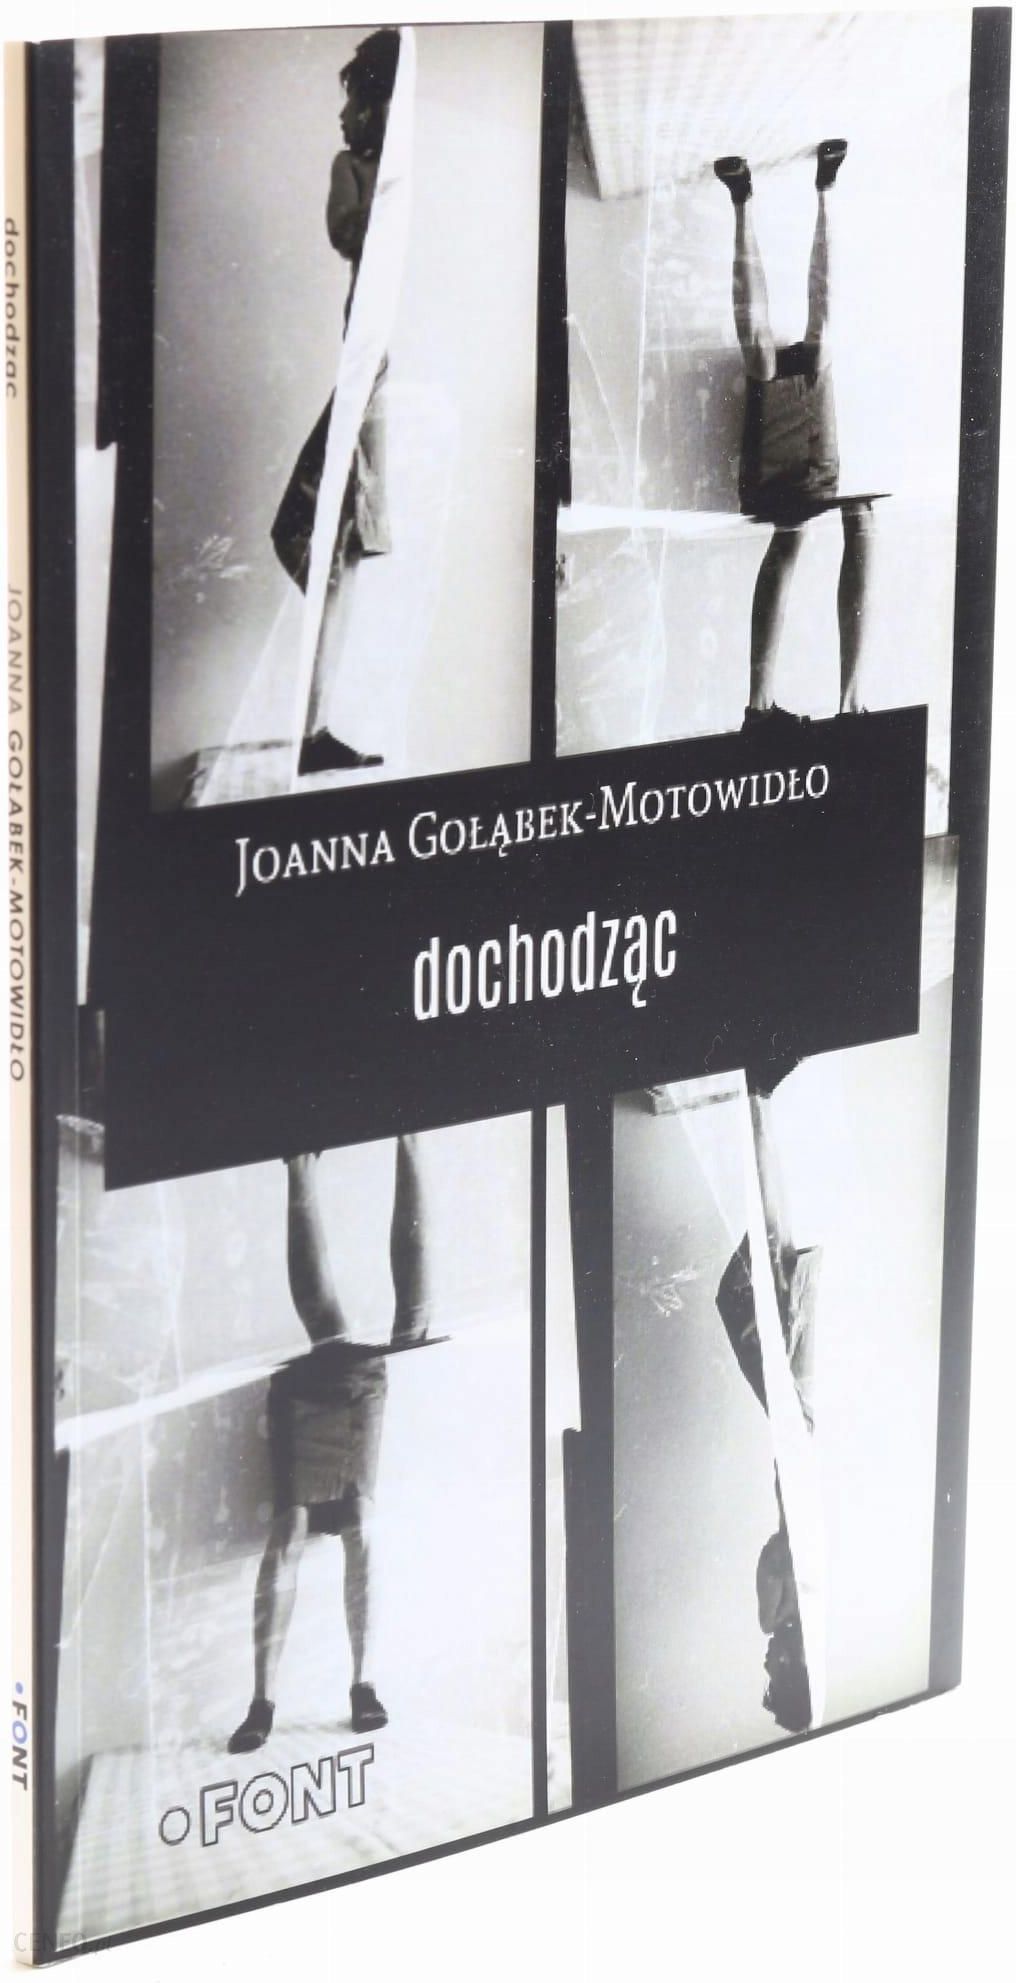 Johanna golabeck